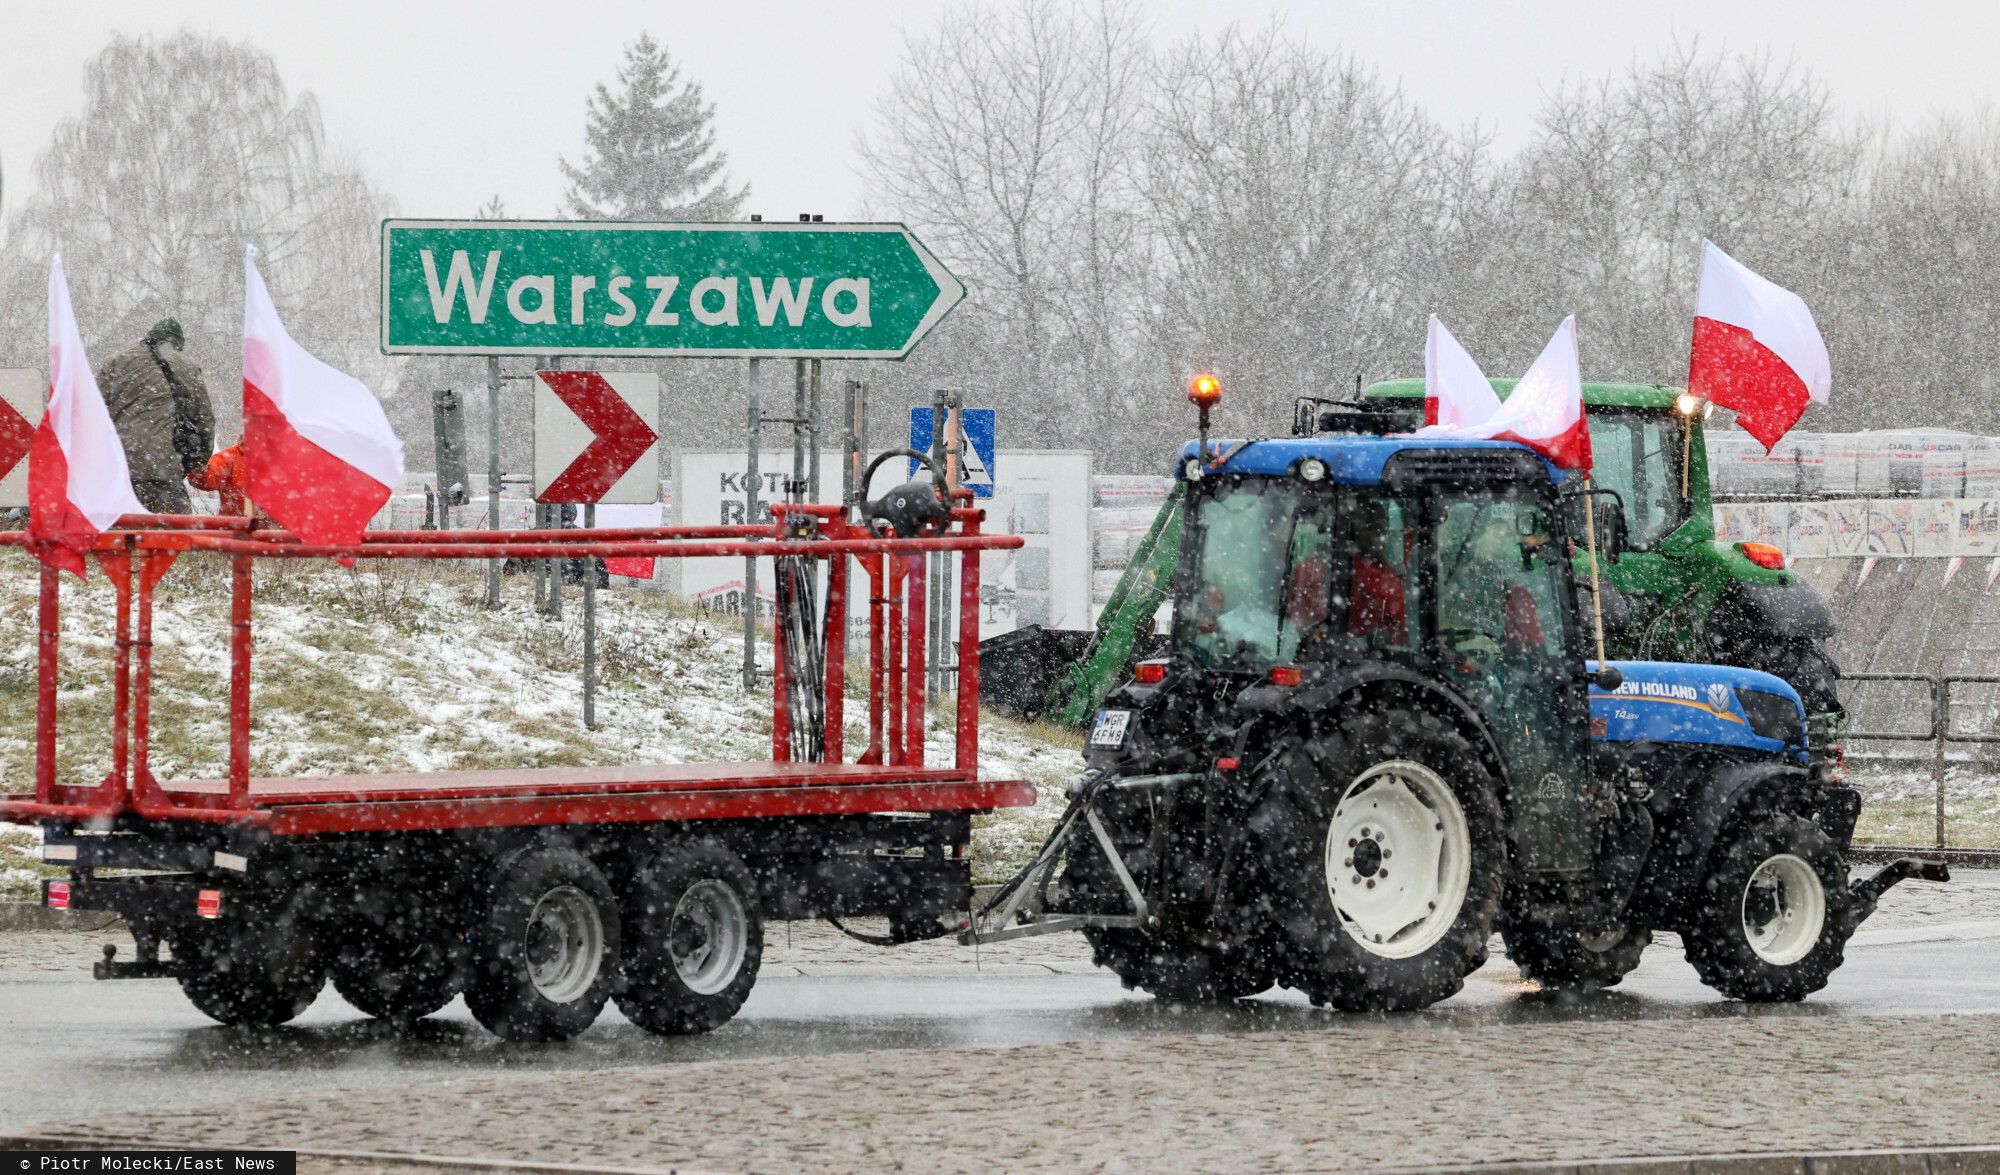 Strajk rolników polska